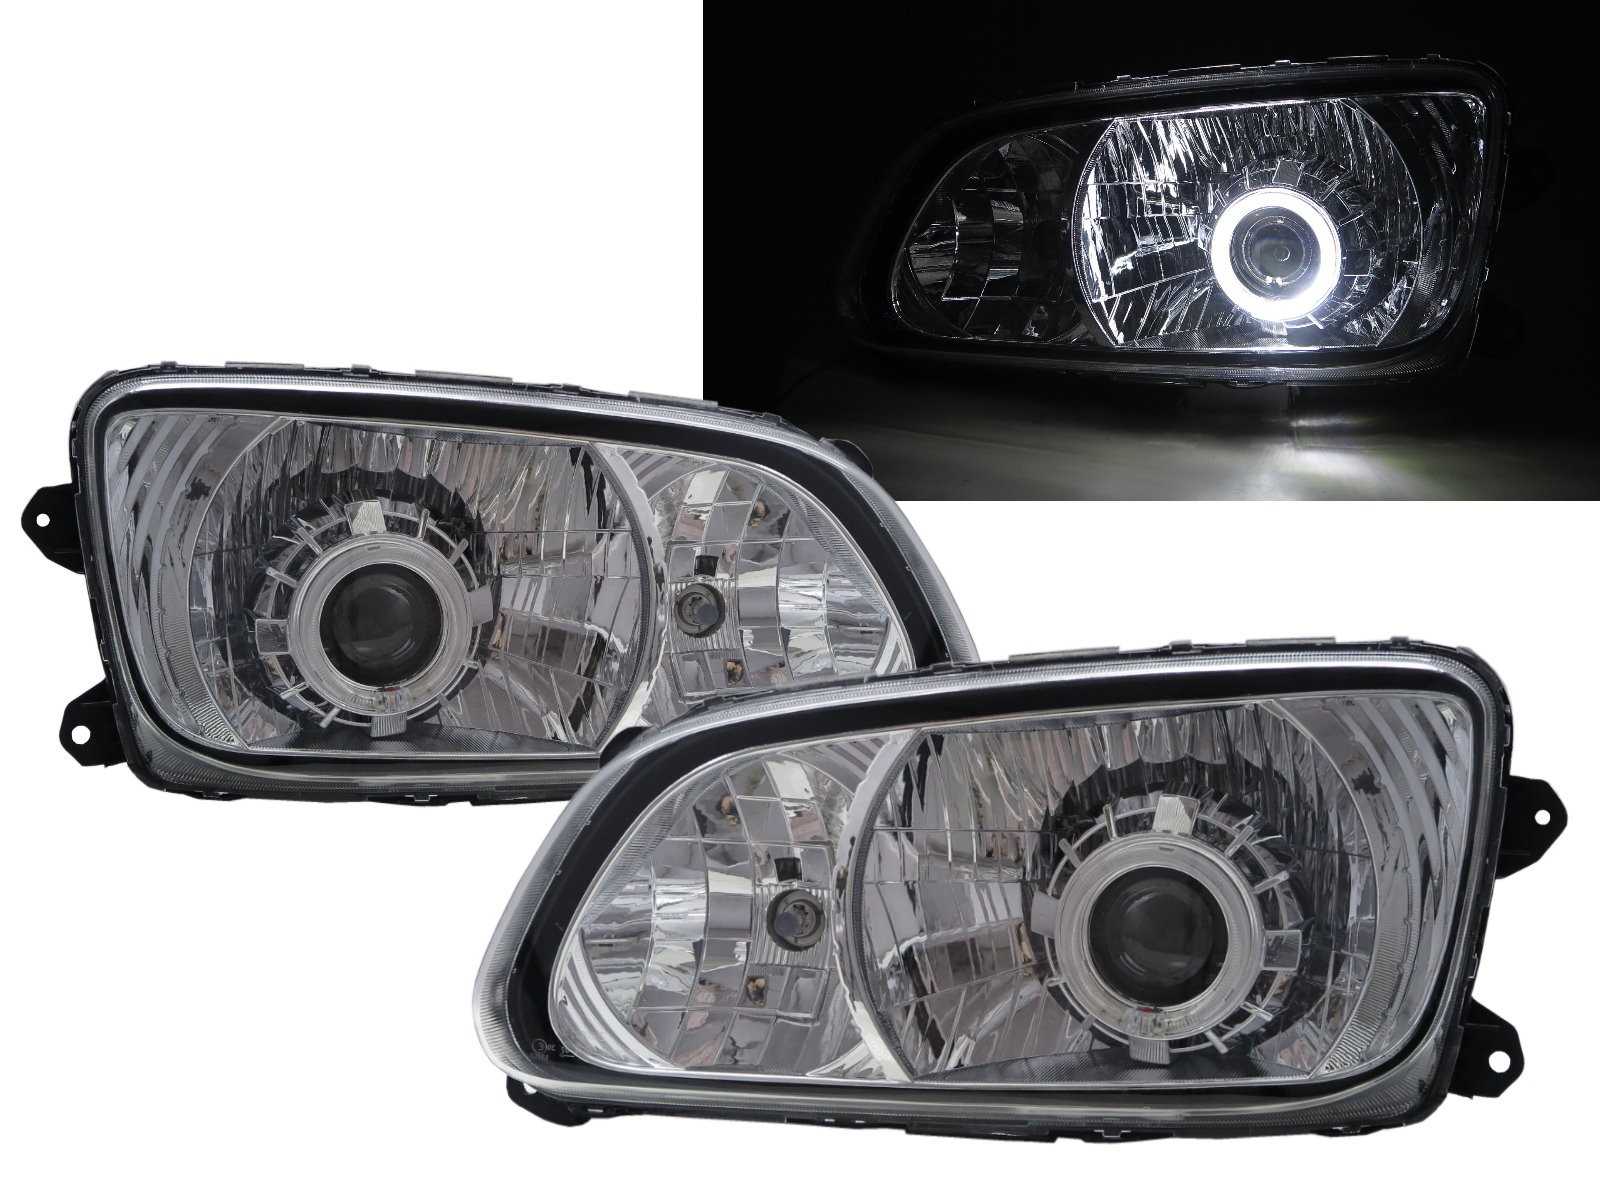 CrazyTheGod Profia 2008-present Truck 2D Guide LED Angel-Eye Projector Headlight Headlamp W/ Motor Chrome for HINO LHD